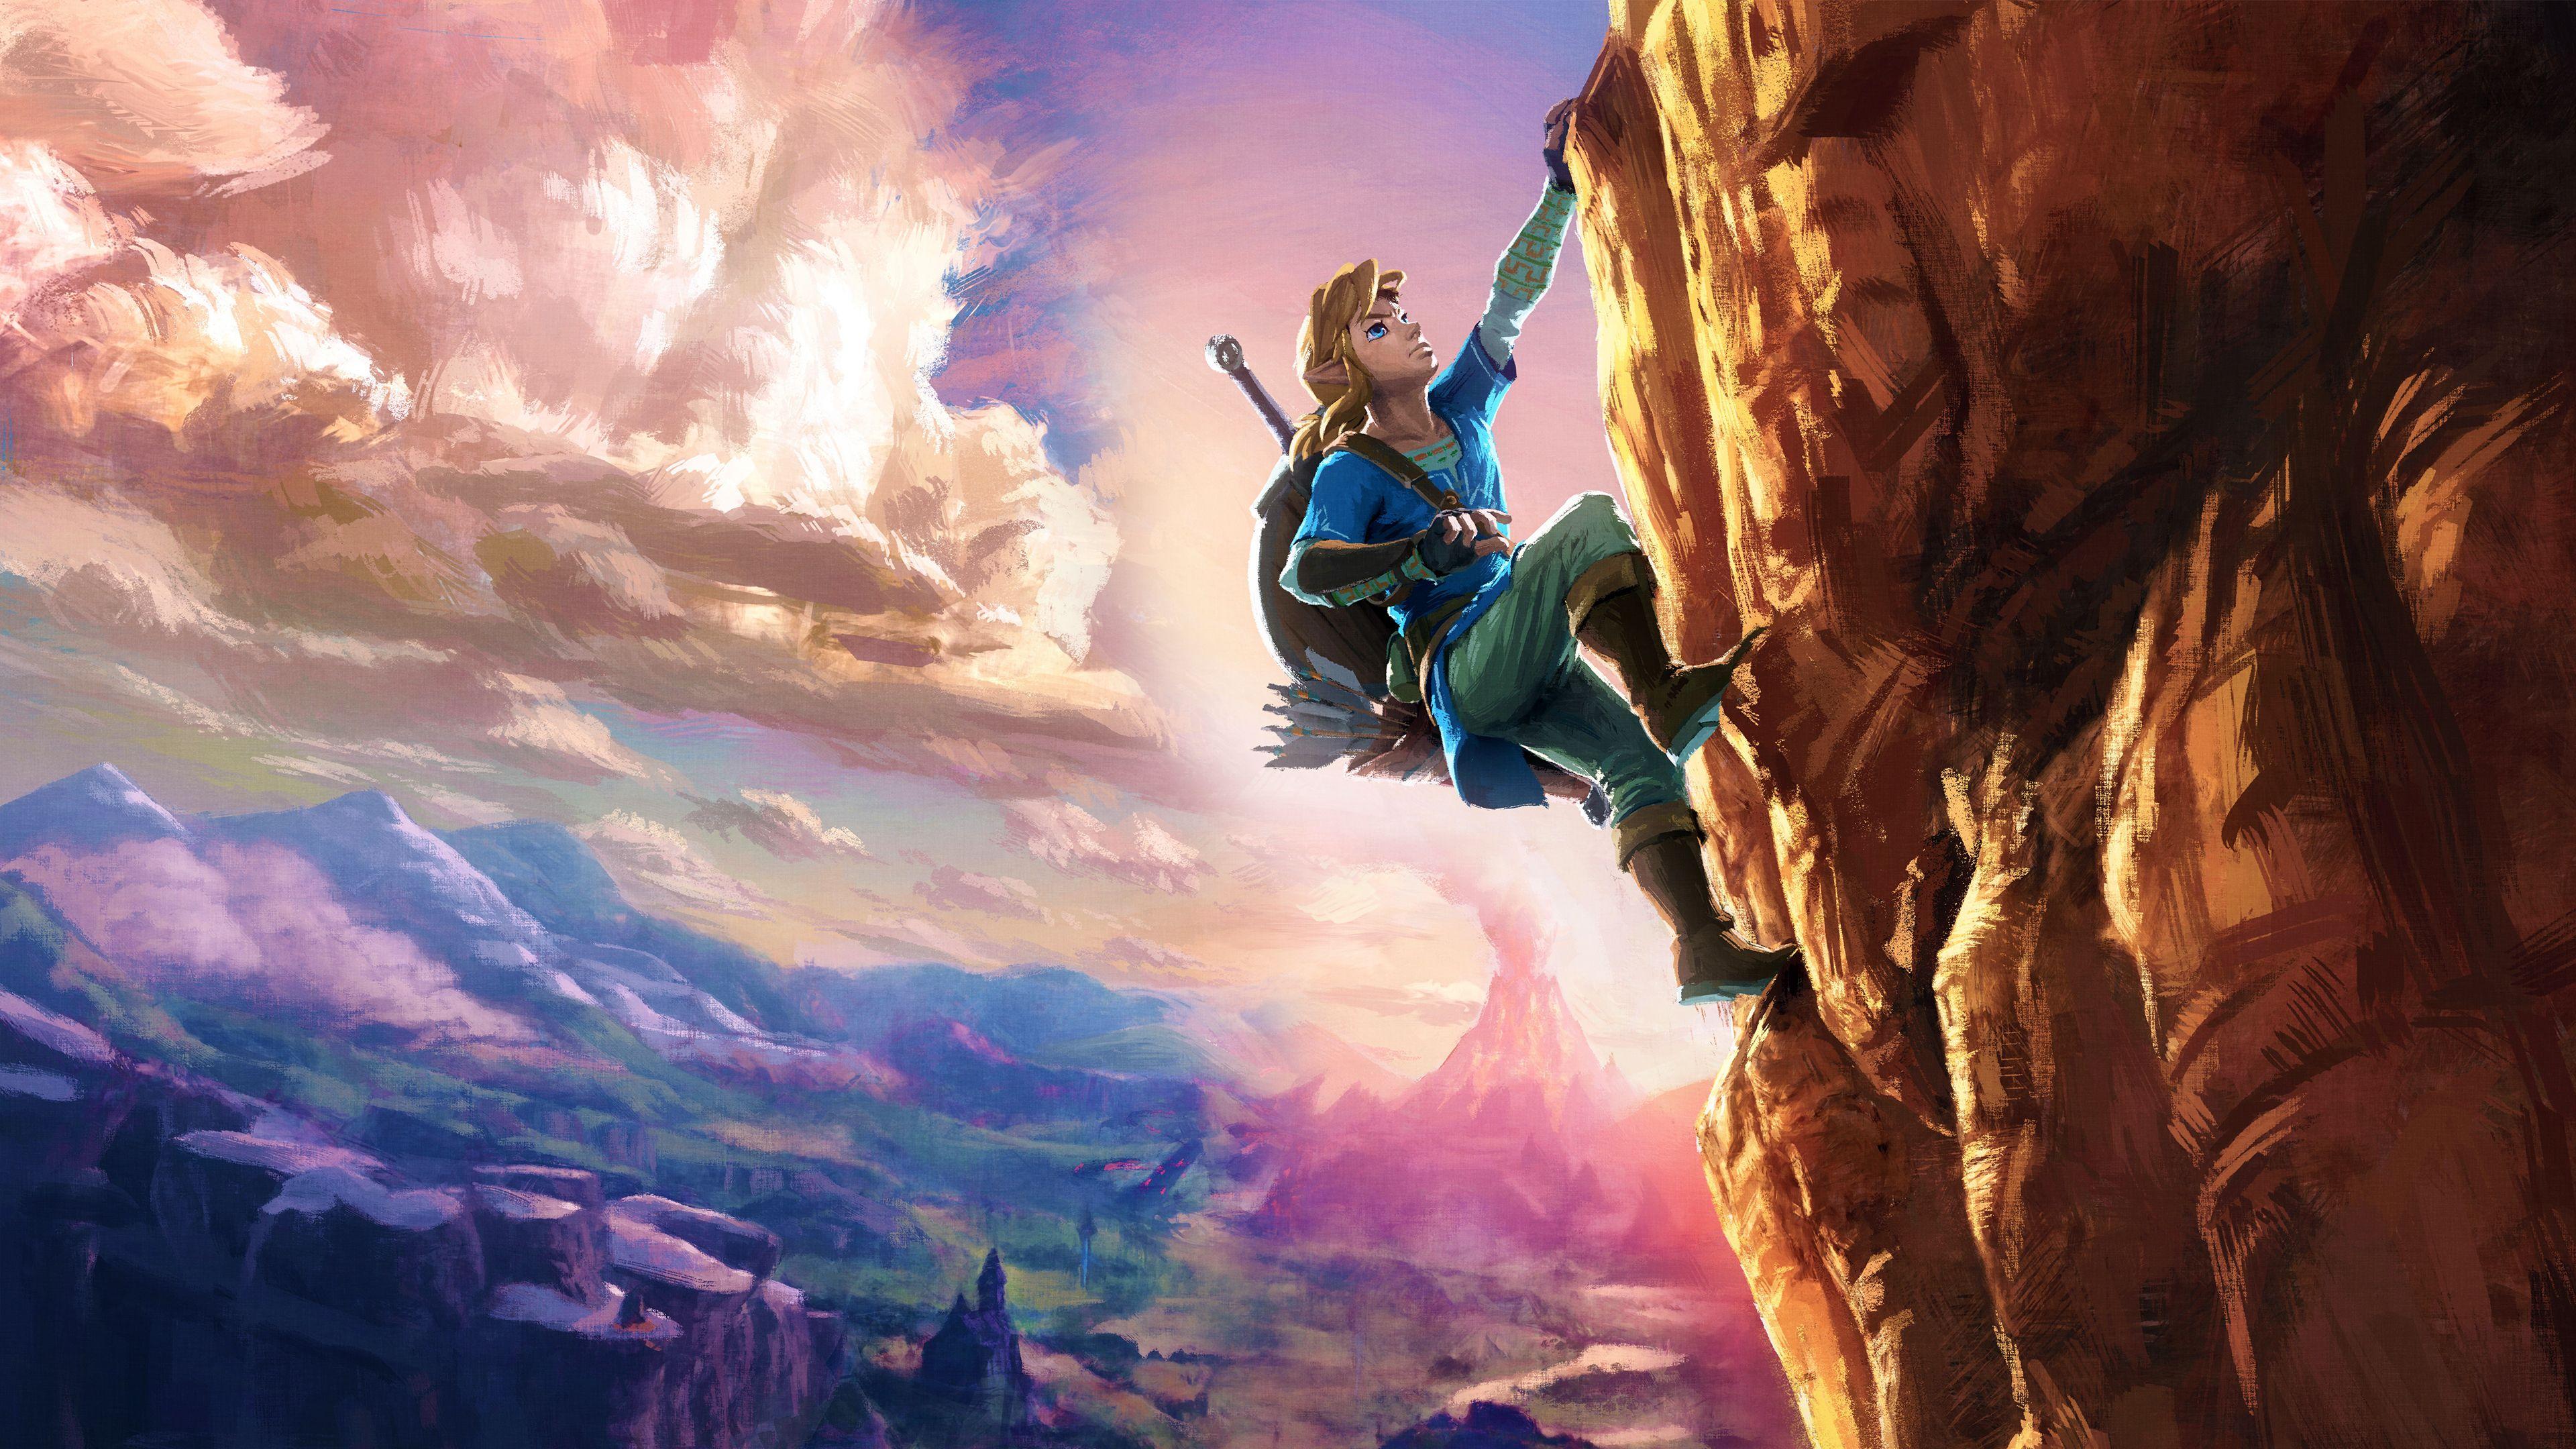 1. "Zelda: Breath of the Wild - Blue Haired Girl" 
2. "Zelda Fan Art: Blue Haired Girl" 
3. "Zelda Cosplay: Blue Haired Girl" 
4. "Zelda: Ocarina of Time - Blue Haired Girl" 
5. "Zelda: Twilight Princess - Blue Haired Girl" 
6. "Zelda: Skyward Sword - Blue Haired Girl" 
7. "Zelda: Majora's Mask - Blue Haired Girl" 
8. "Zelda: Wind Waker - Blue Haired Girl" 
9. "Zelda: A Link to the Past - Blue Haired Girl" 
10. "Zelda: Oracle of Ages/Seasons - Blue Haired Girl" - wide 3